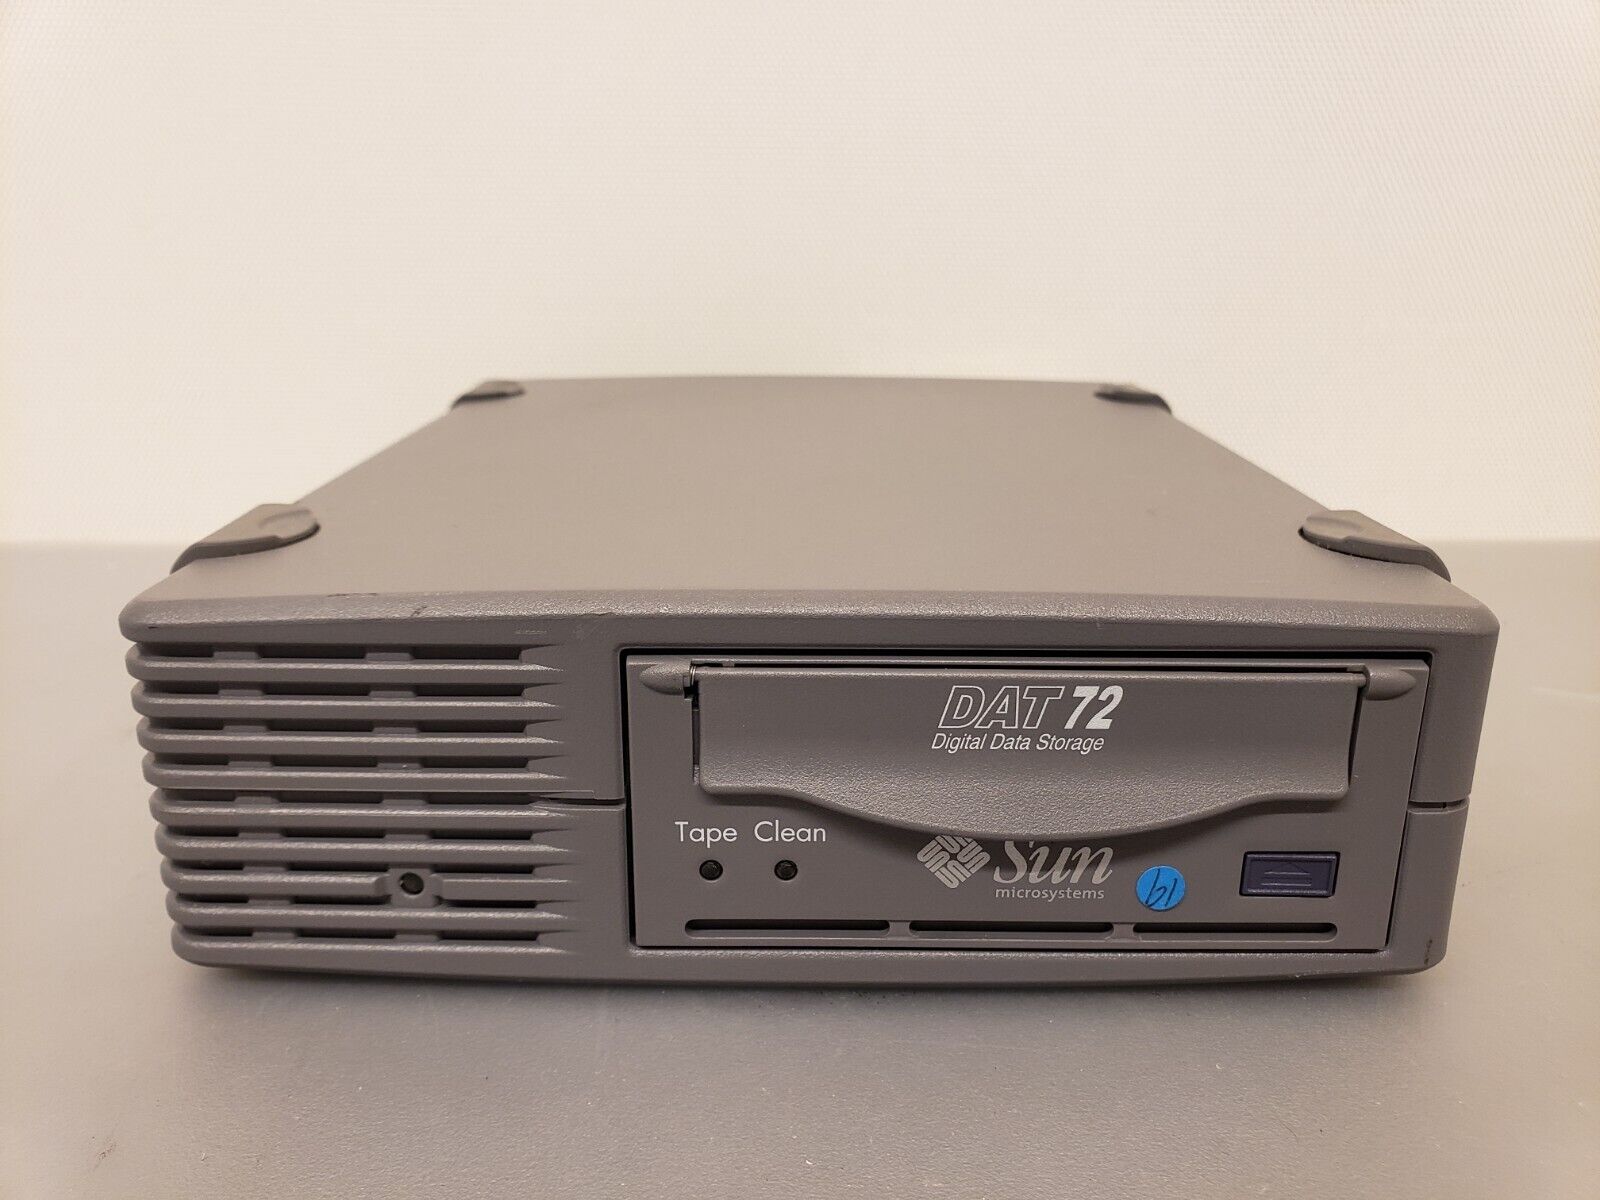 Sun 380-1323 Dat72 36/72GB 4mm SCSI LVD DAT External Optical Tape Drive